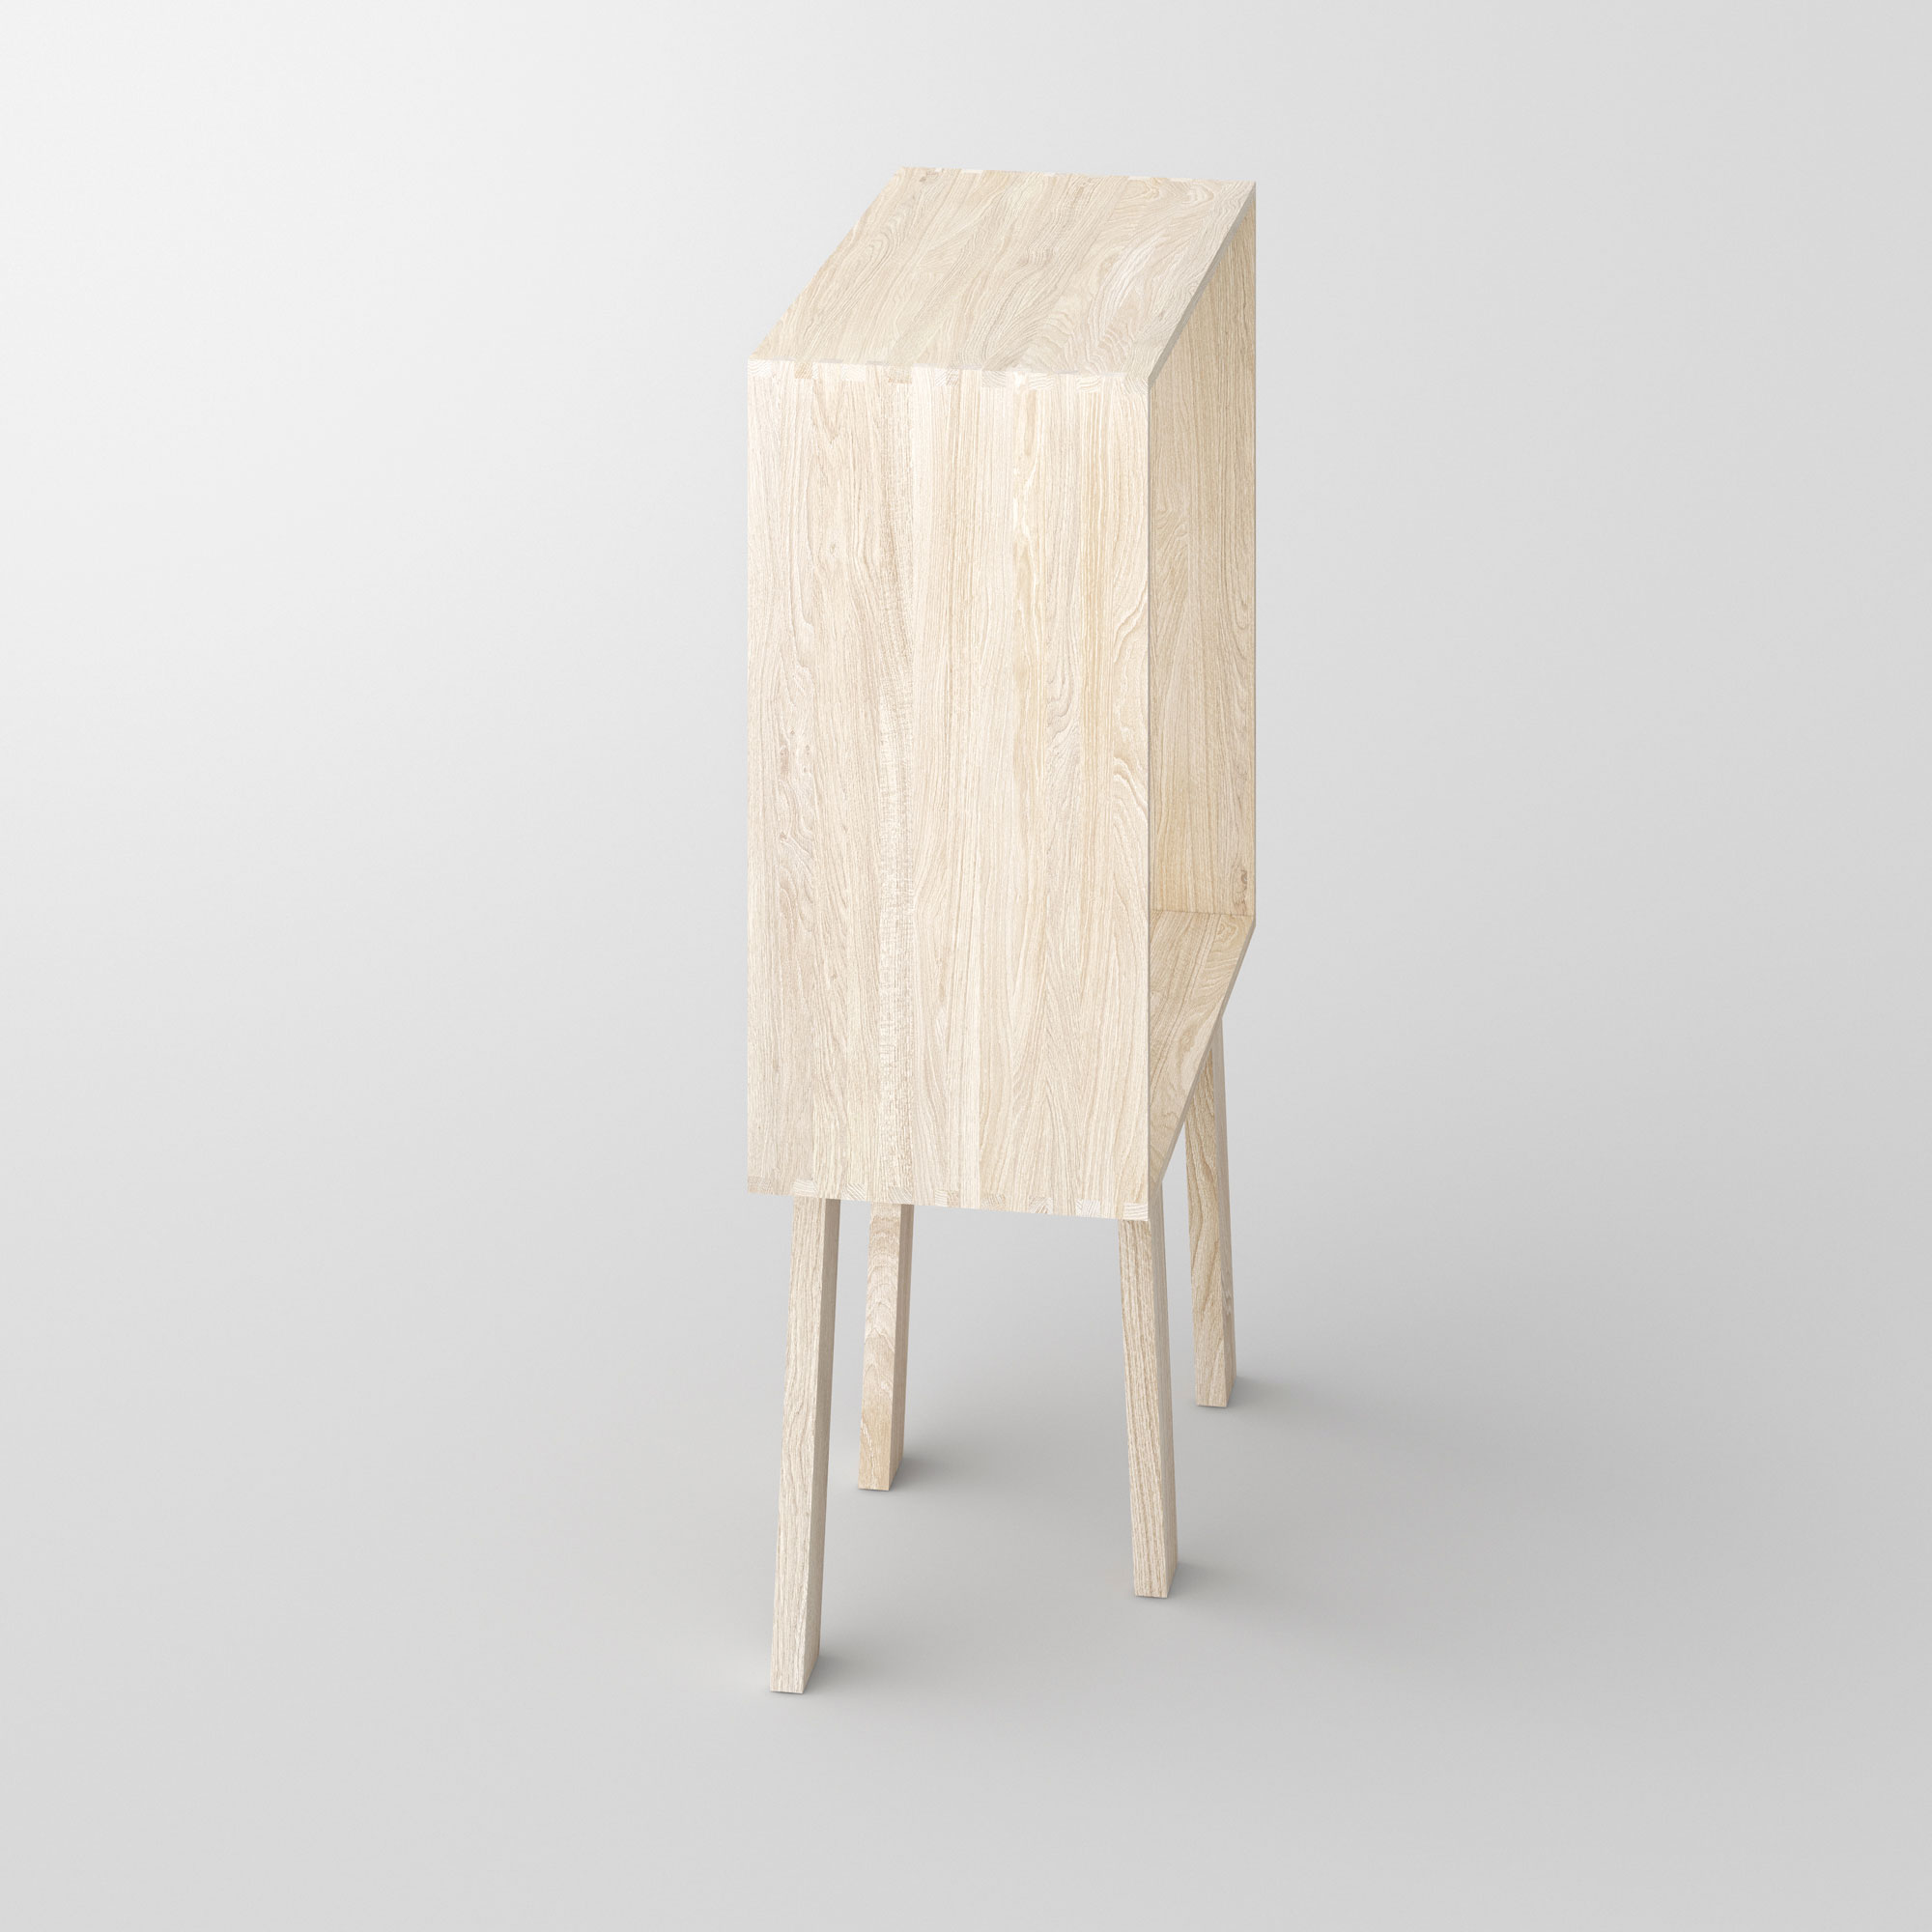 Solid Wood Shelf GO RW 0000 custom made in solid wood by vitamin design